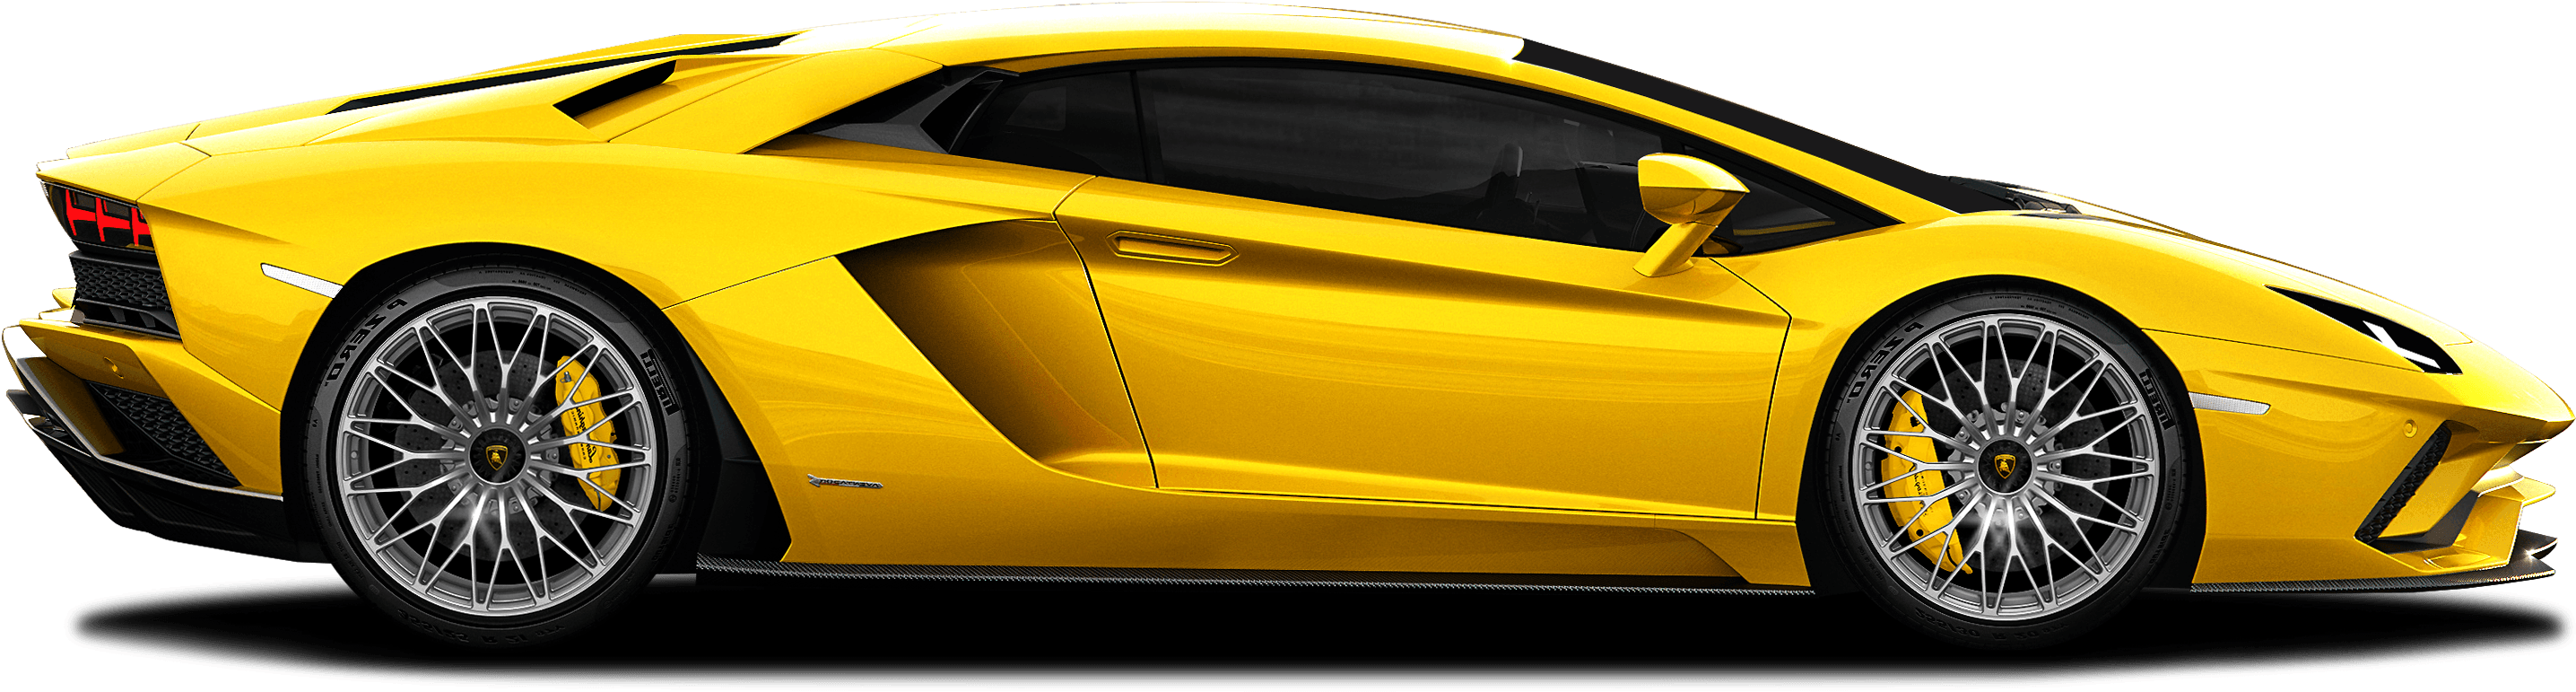 Lamborghini Yellow Download Free Image PNG Image